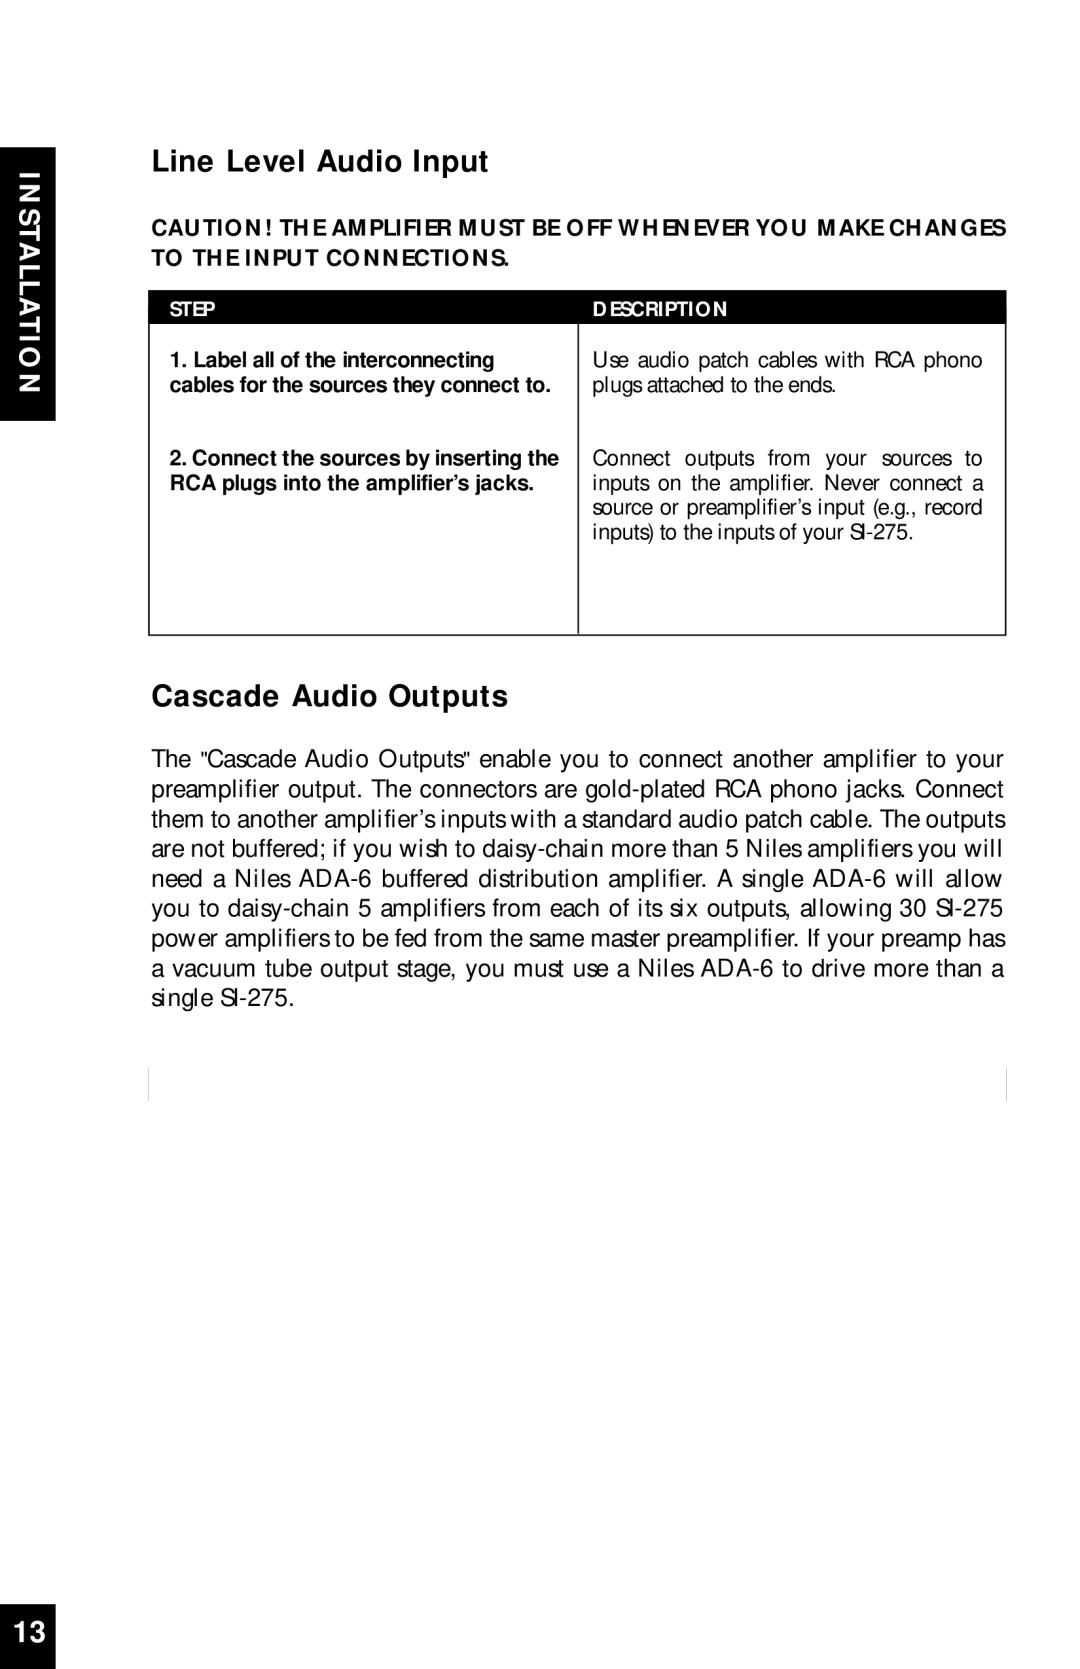 Niles Audio SI-275 manual Line Level Audio Input, Cascade Audio Outputs 